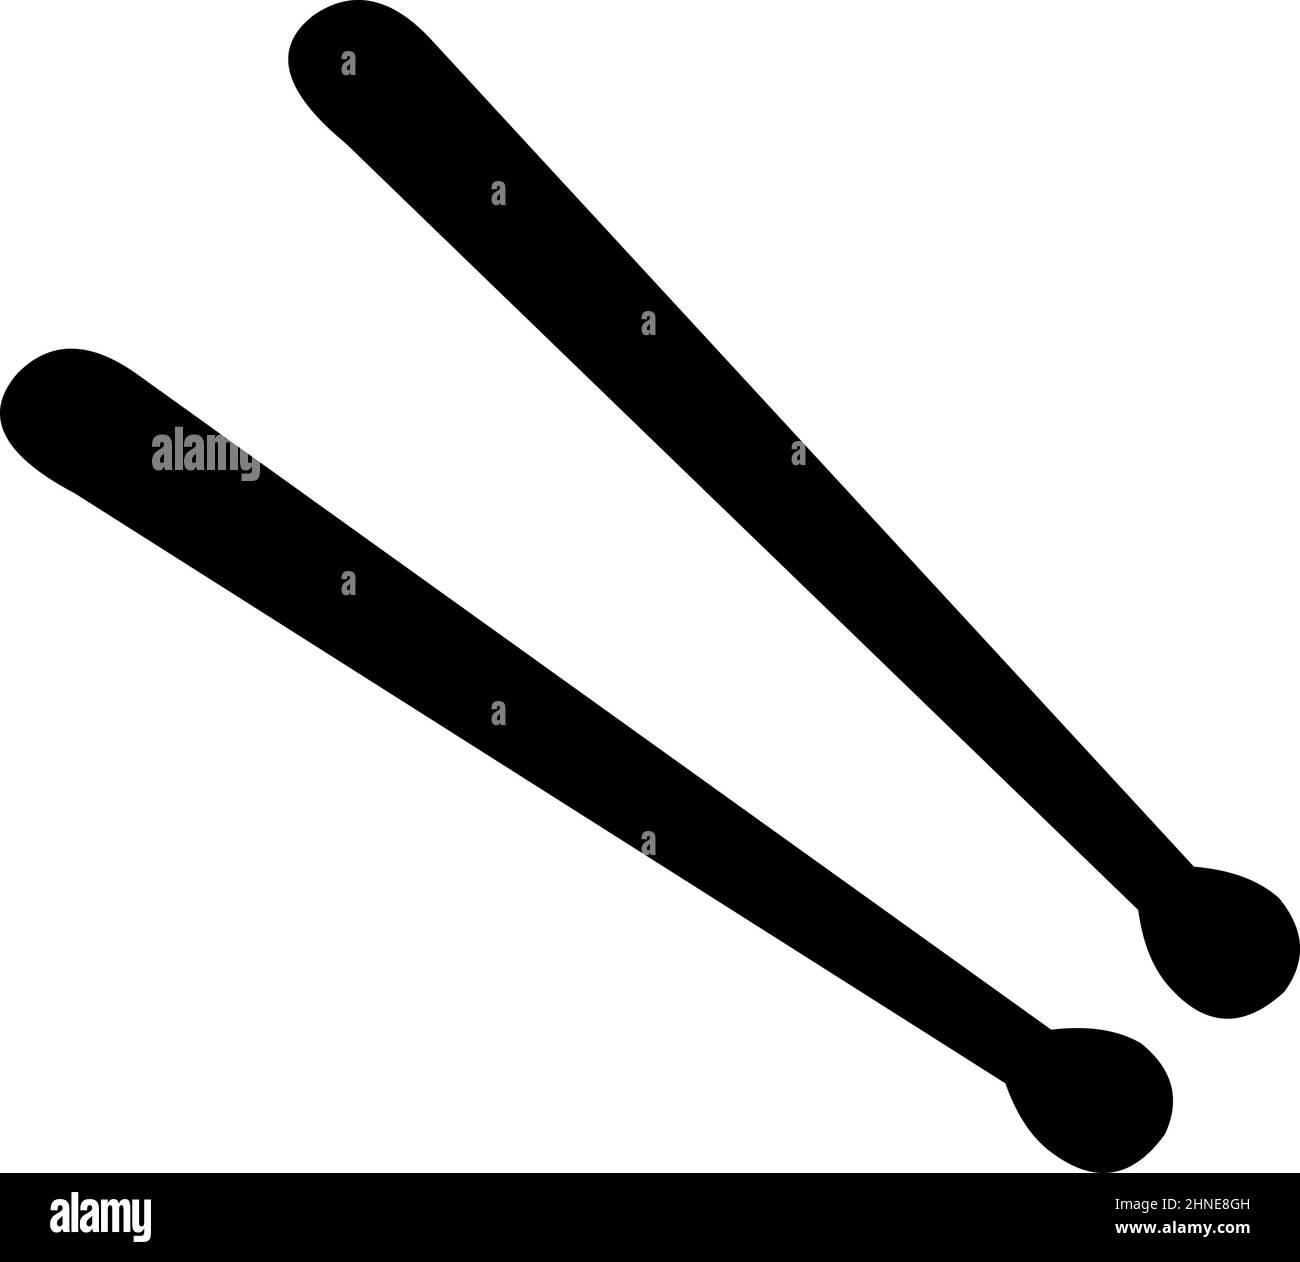 Vektor-Illustration von Drumsticks schwarze Farbe Silhouette Stock Vektor